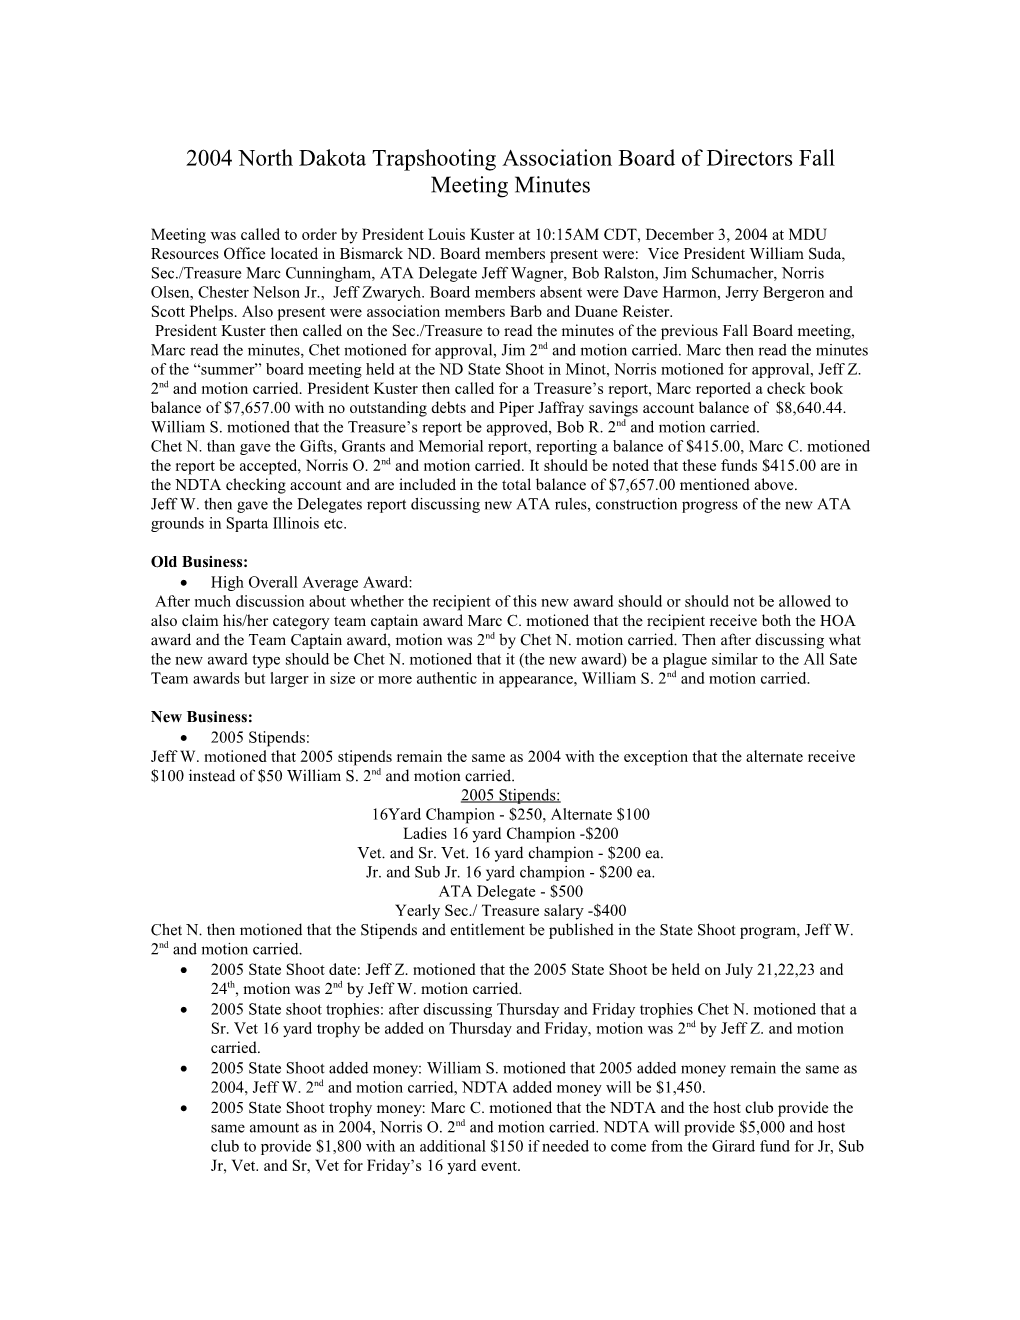 2004 North Dakota Trapshooting Association Board of Directors Fall Meeting Minutes